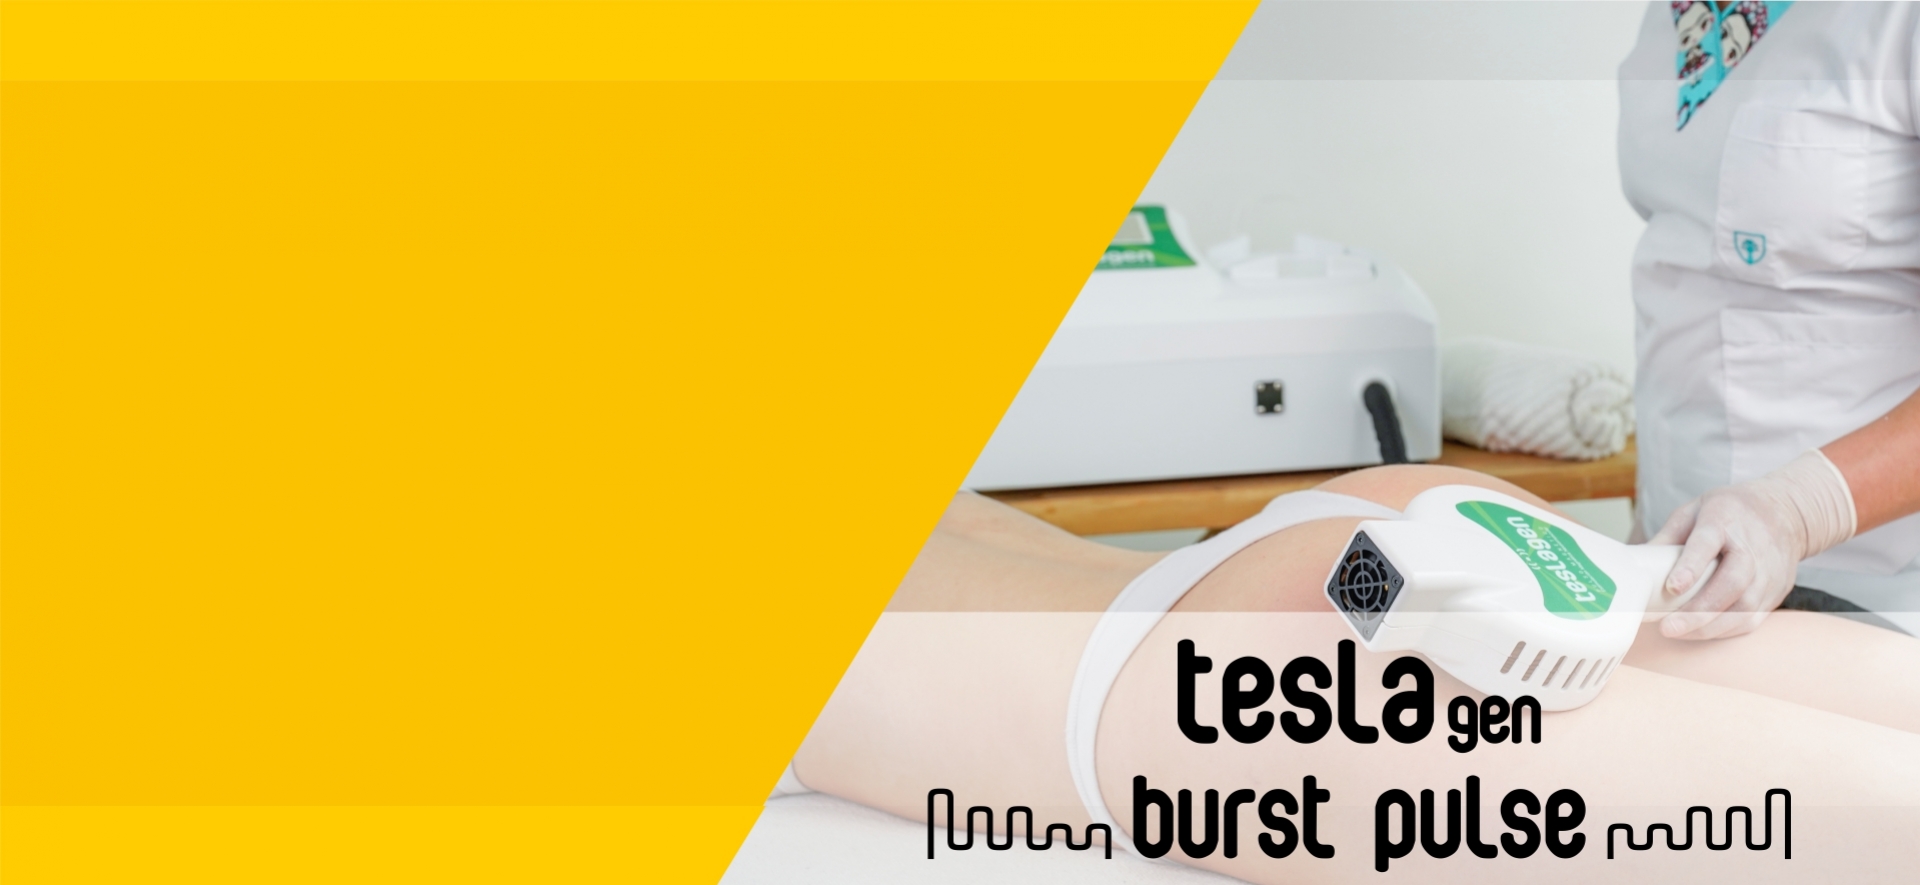 Teslagen Burst Pulse